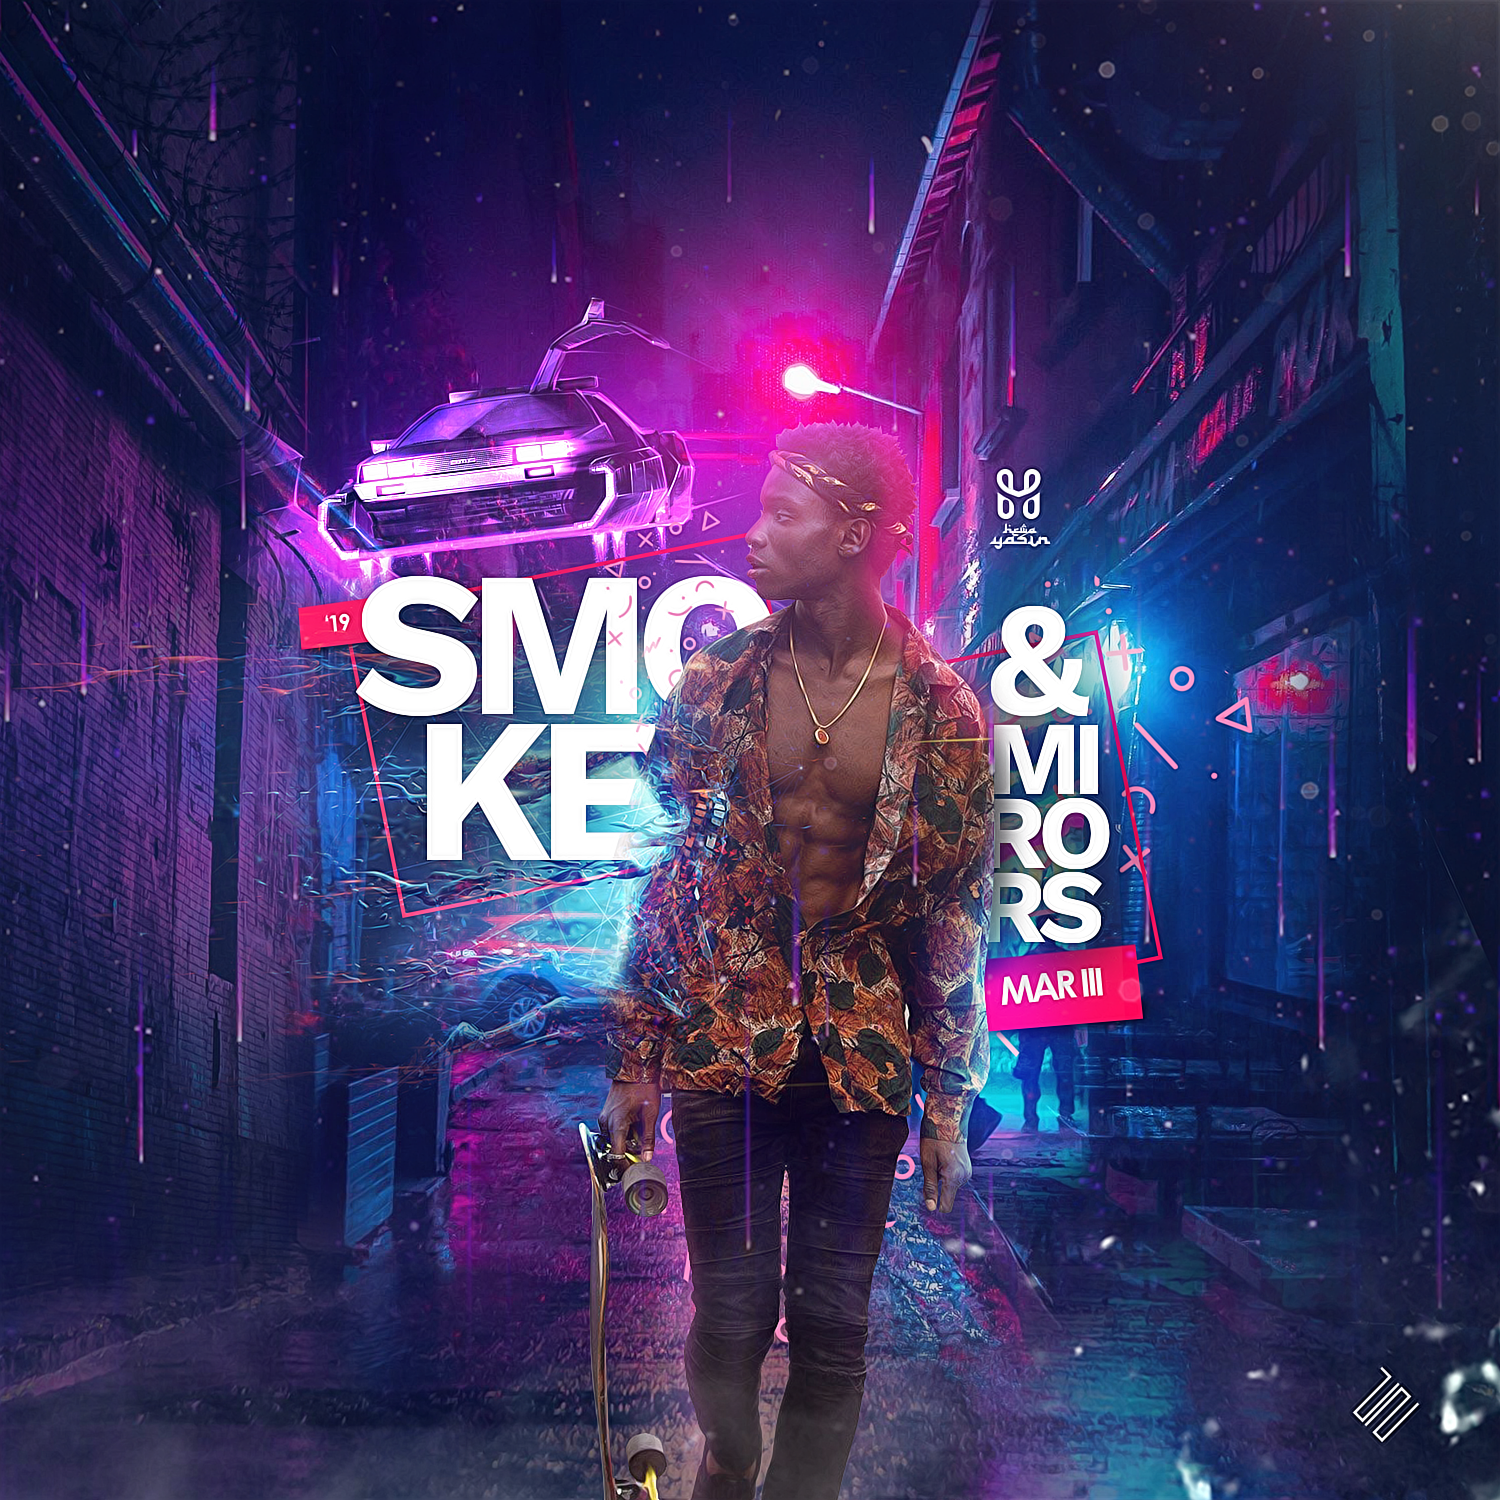 Smoke x Mirrors '19|03: III